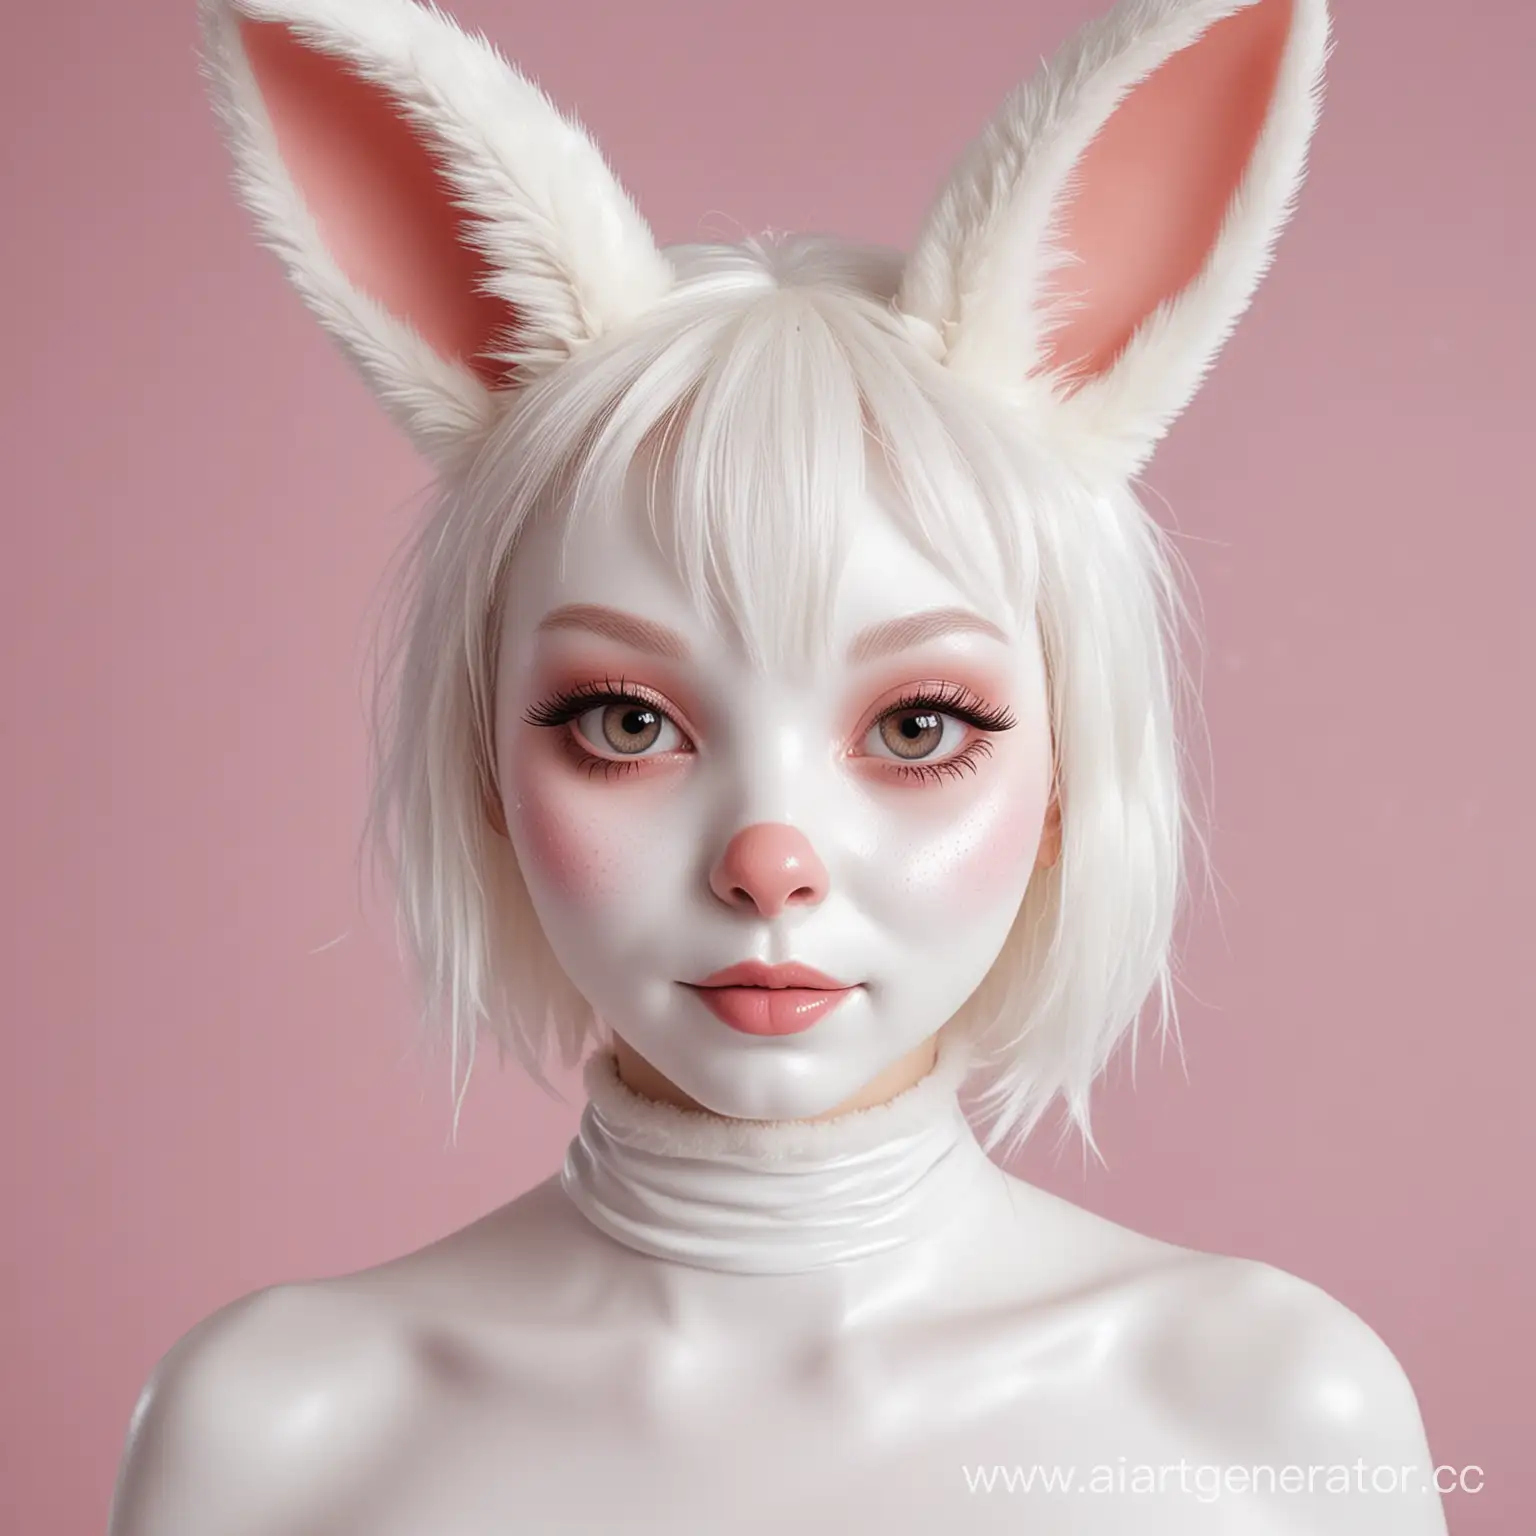 DisneyStyle-Cartoon-of-a-Furry-Girl-Rabbit-with-Latex-Skin